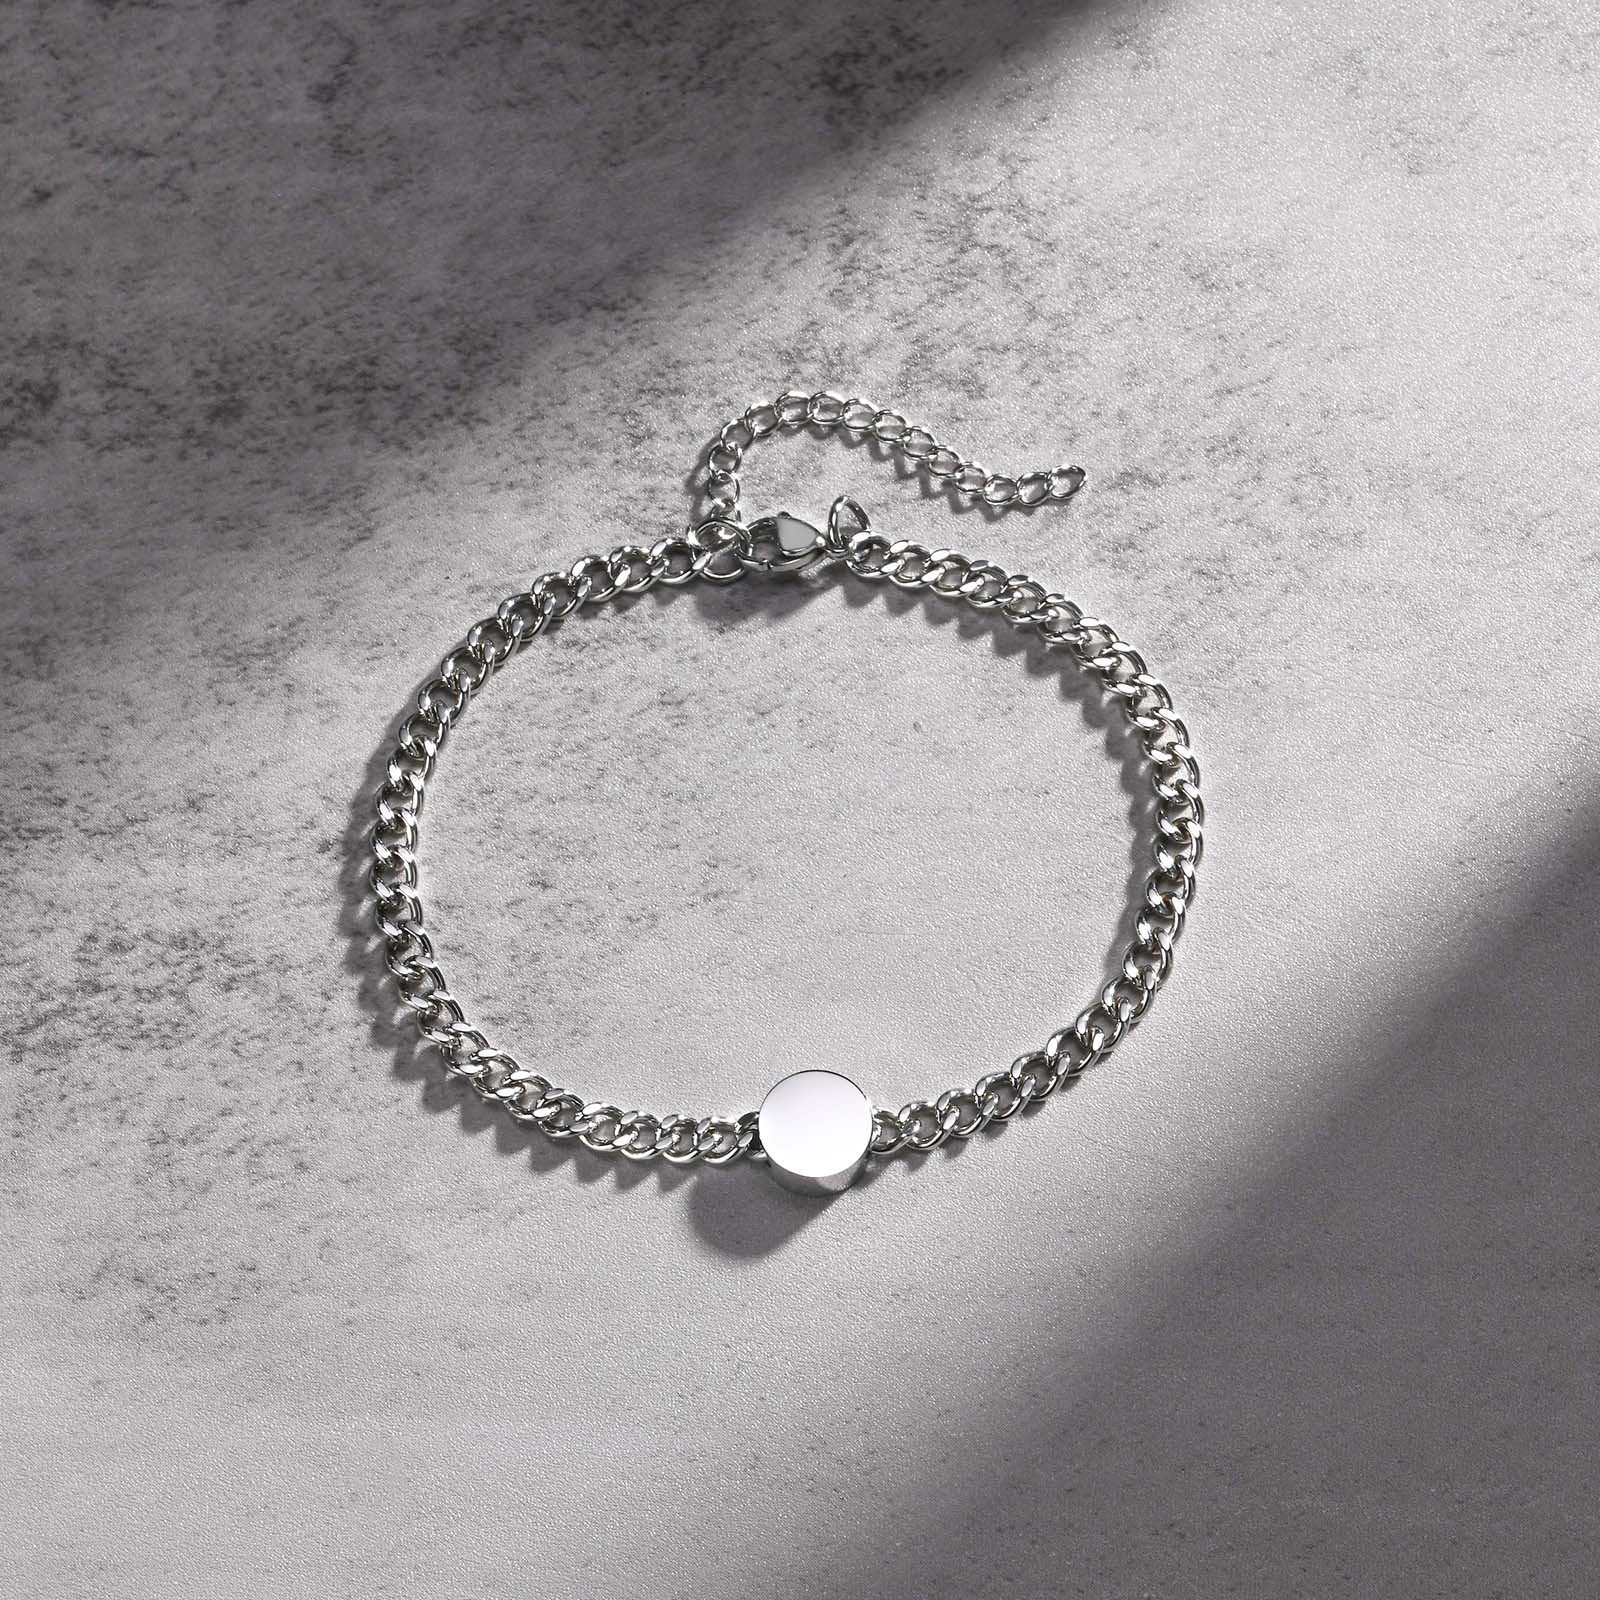 1 accessory [blank] bracelet